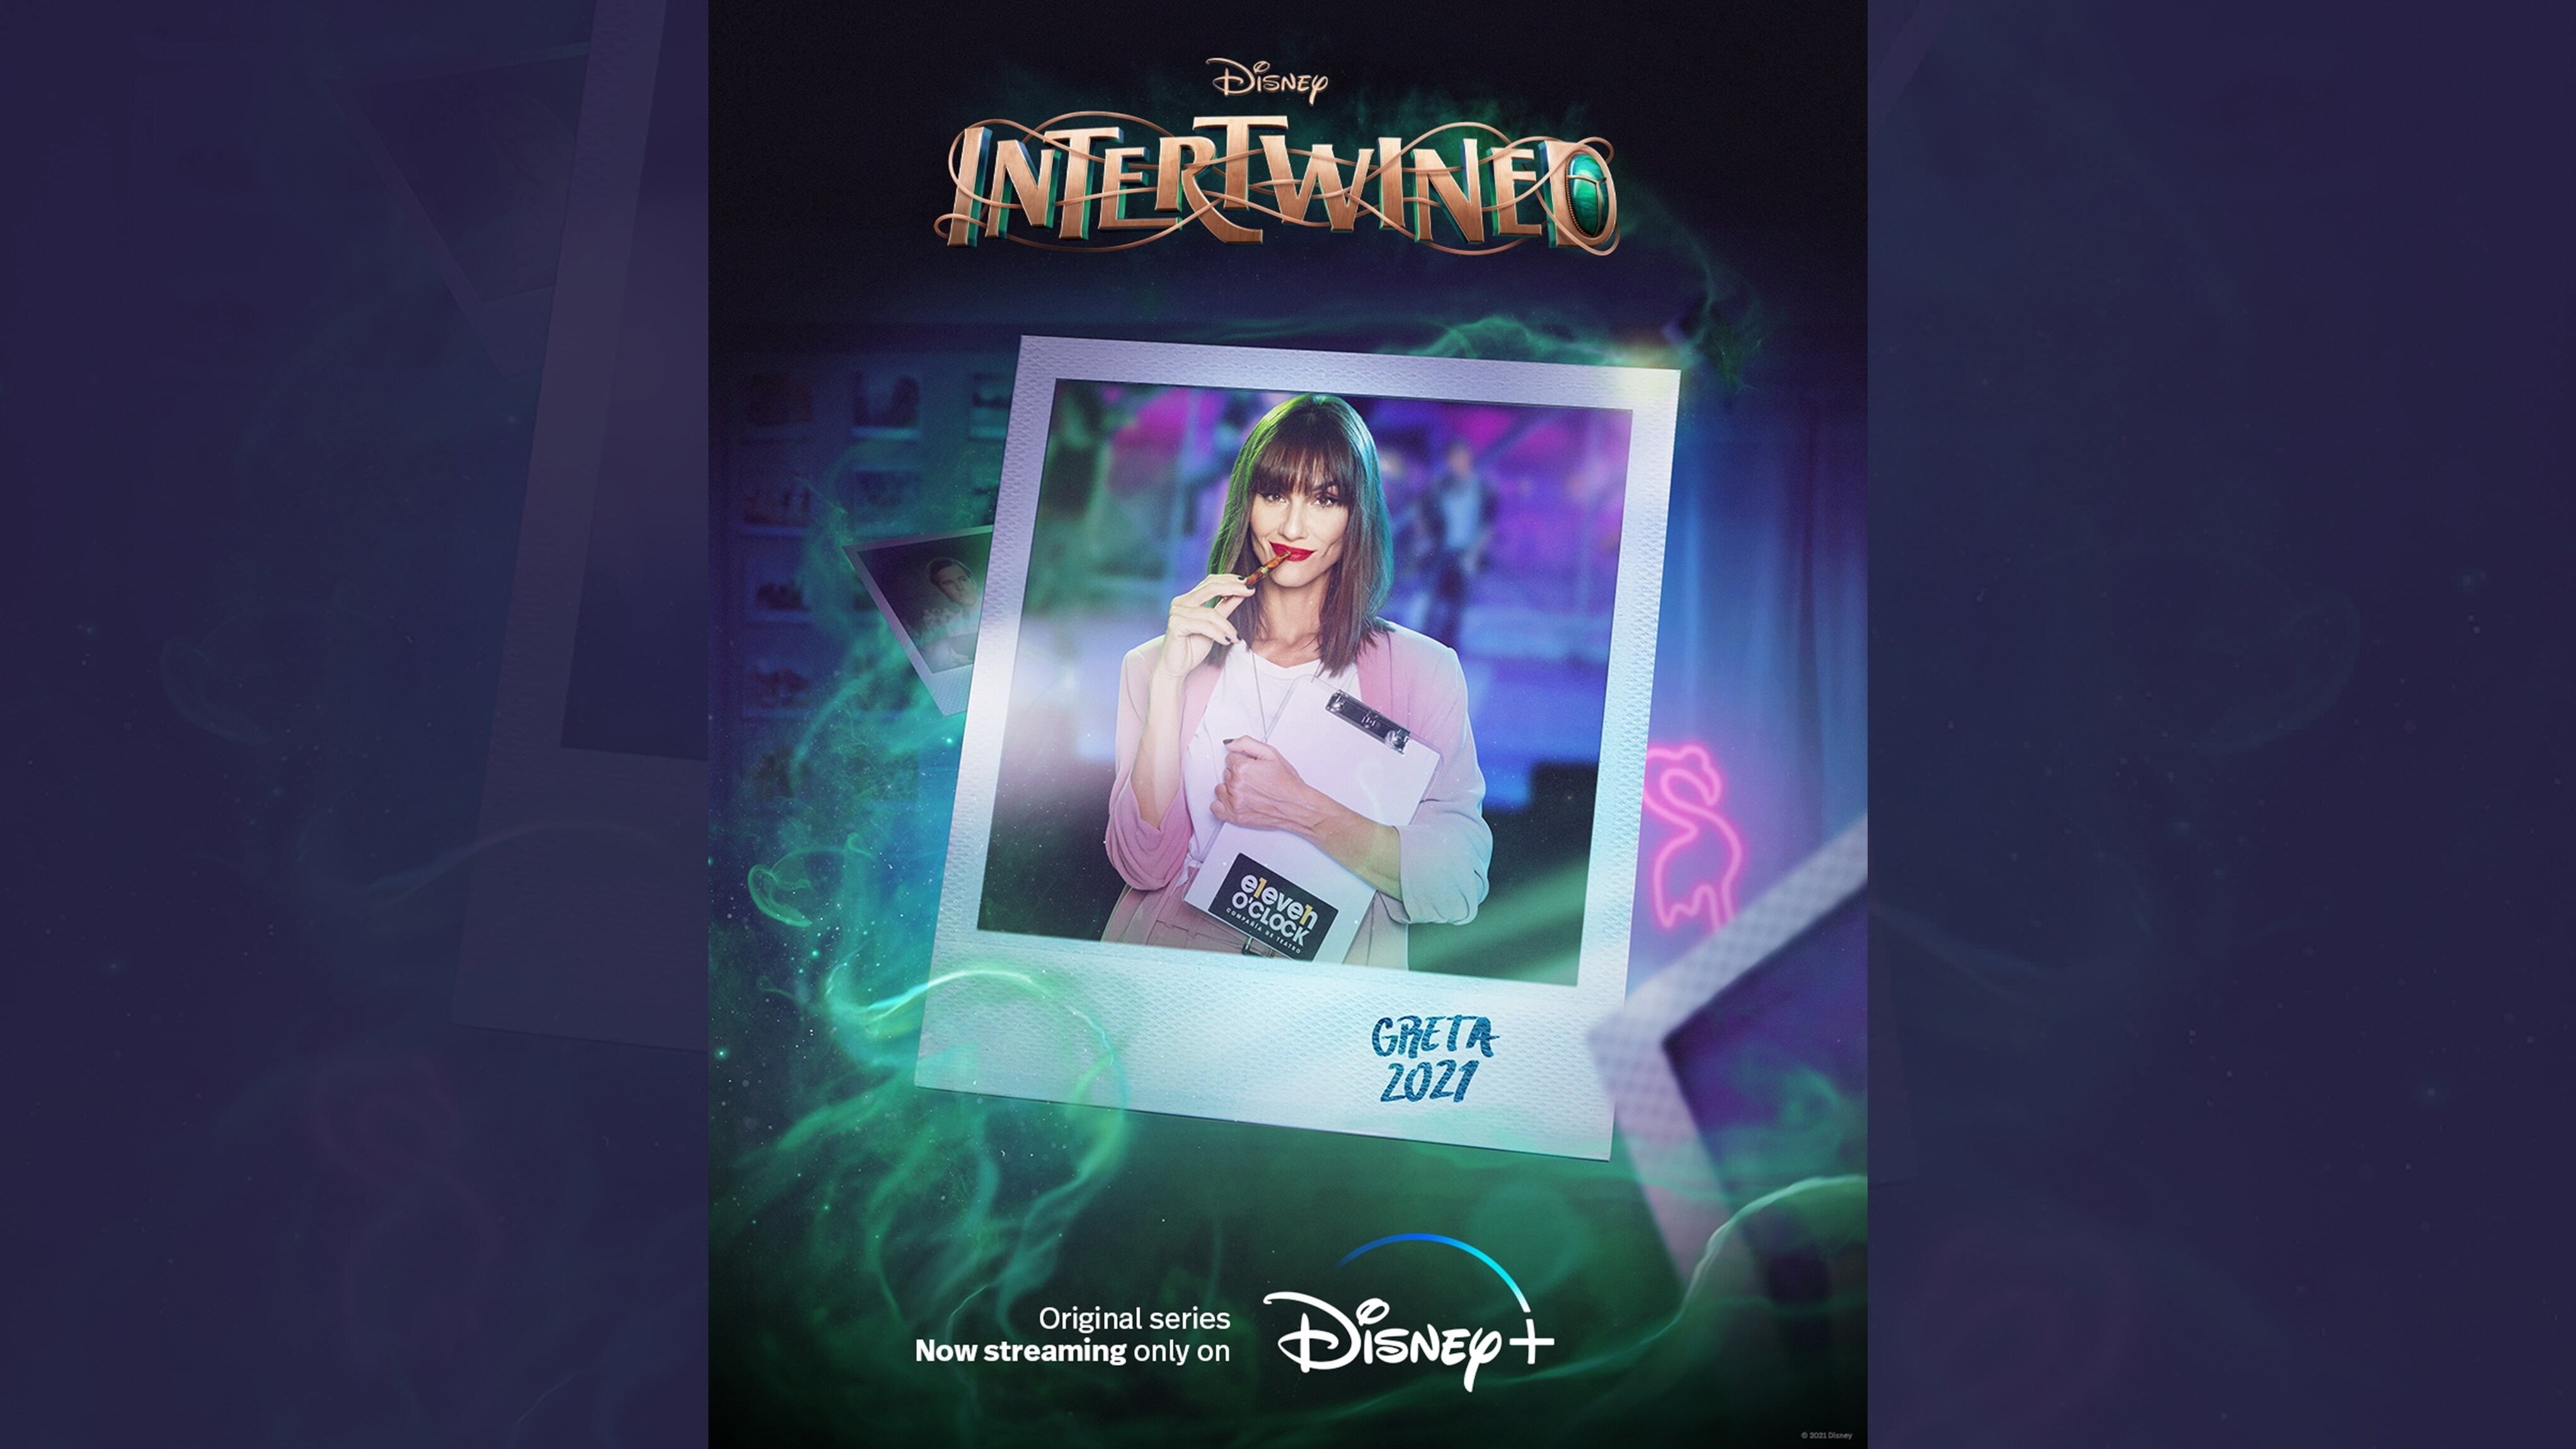 Disney | Intertwined | Greta (2021) | Original series now streaming only on Disney+